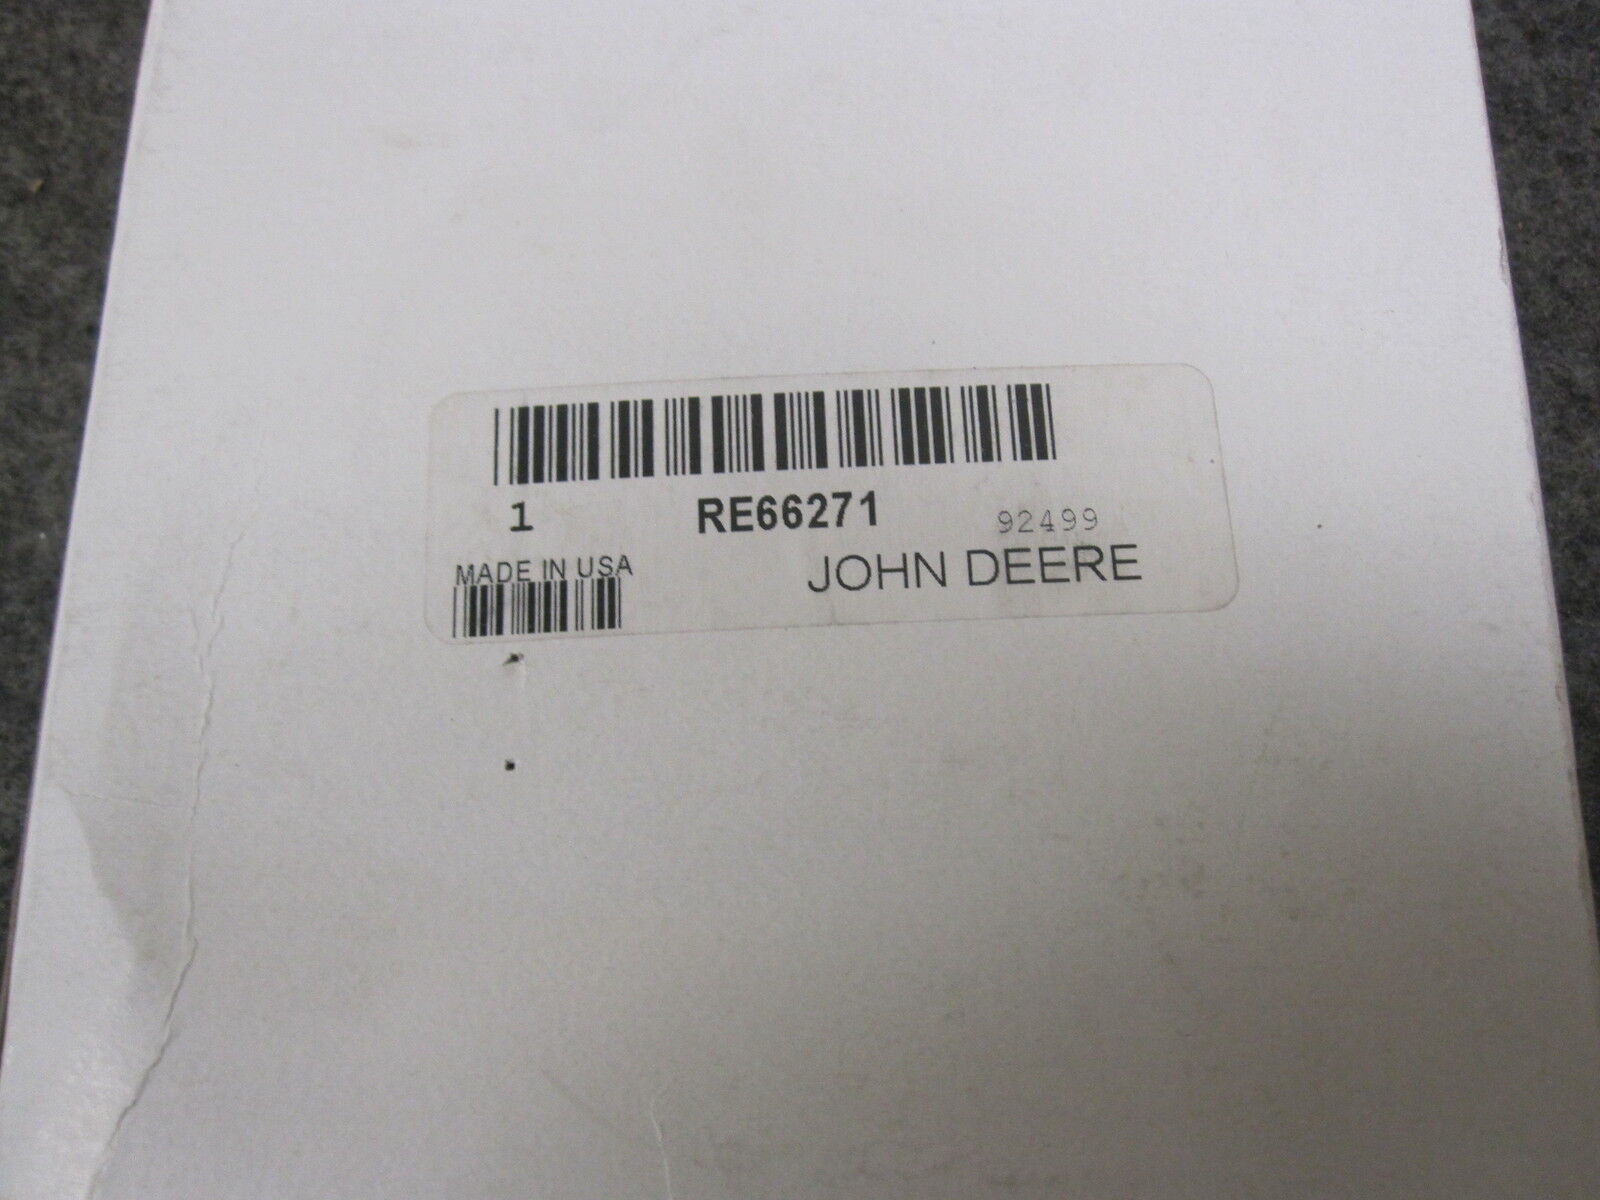 NEW GENUINE JOHN DEERE PISTON RING KIT # RE66271 FITS 4.5D-4.5T, 6.8D-6.8T